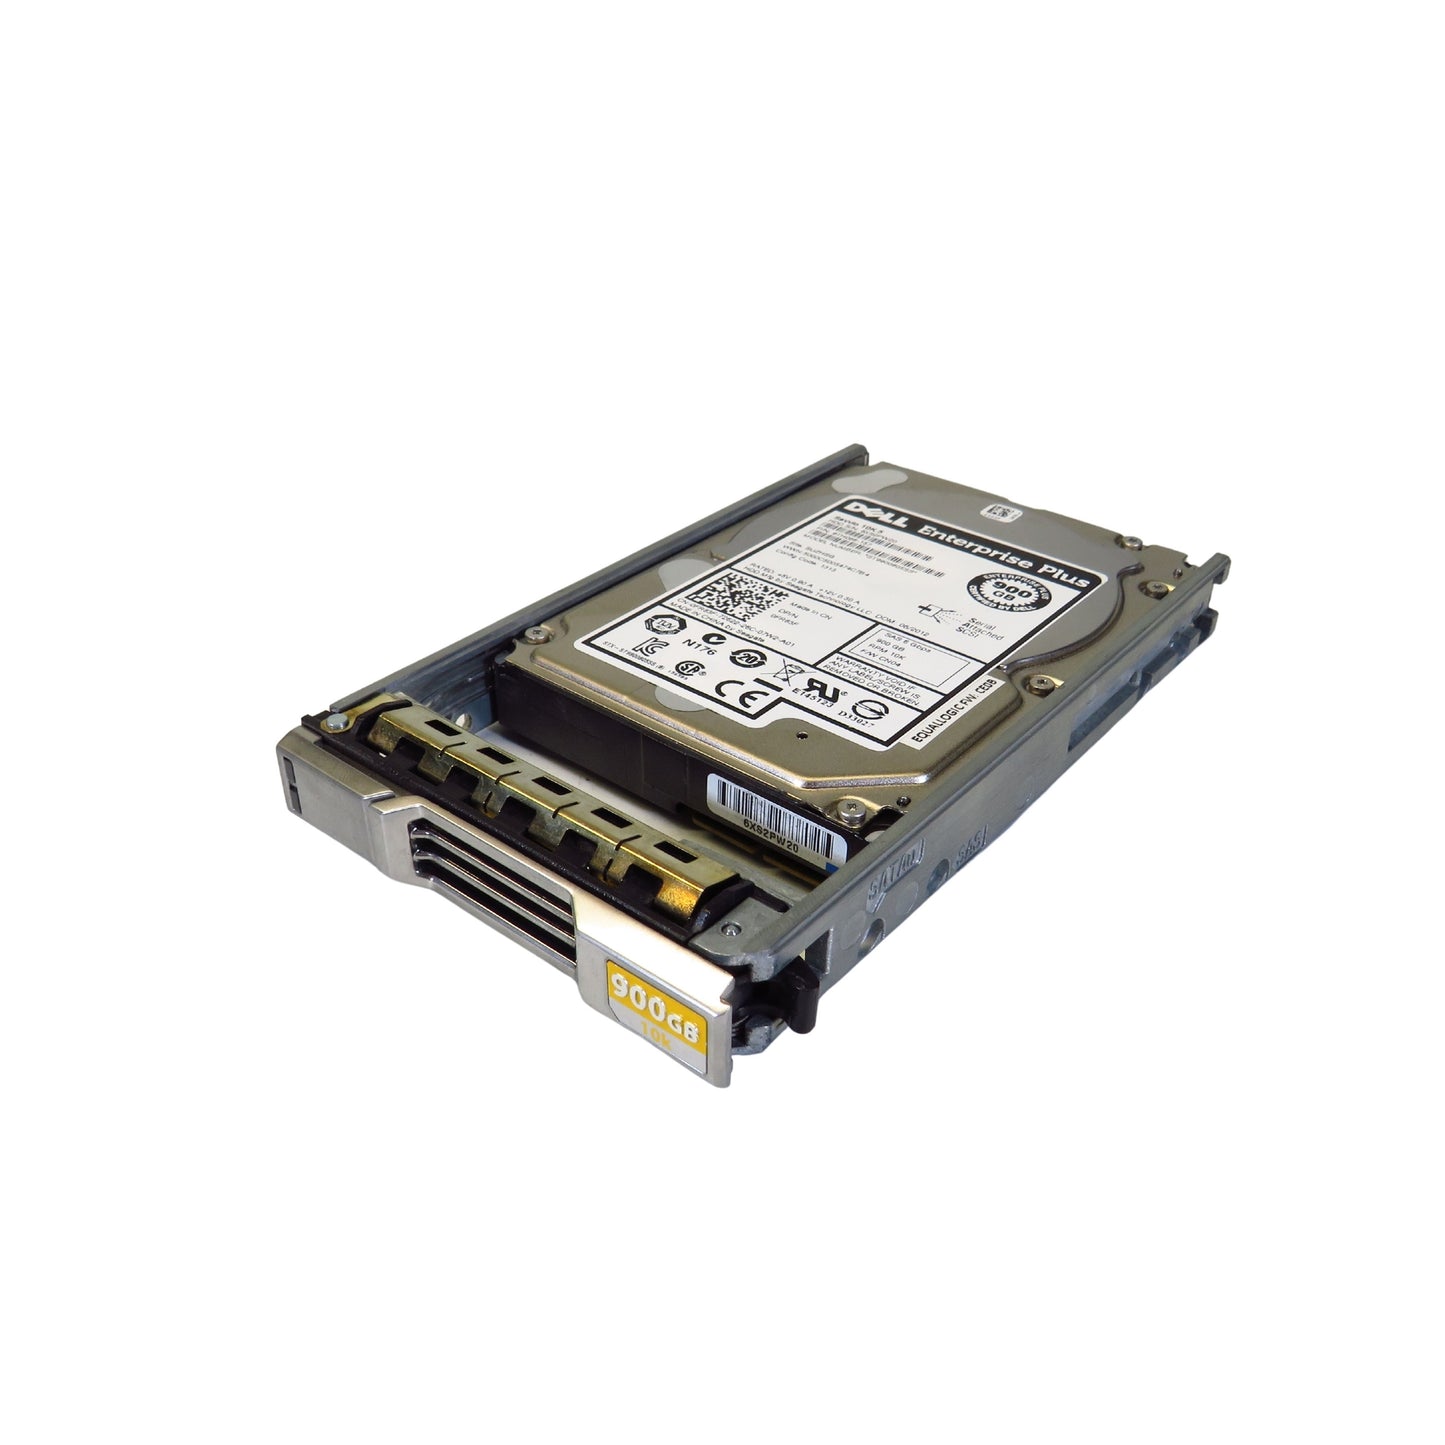 EqualLogic FR83F 900GB 10K RPM 2.5" SAS 6Gbps SFF HDD Hard Drive (Refurbished)